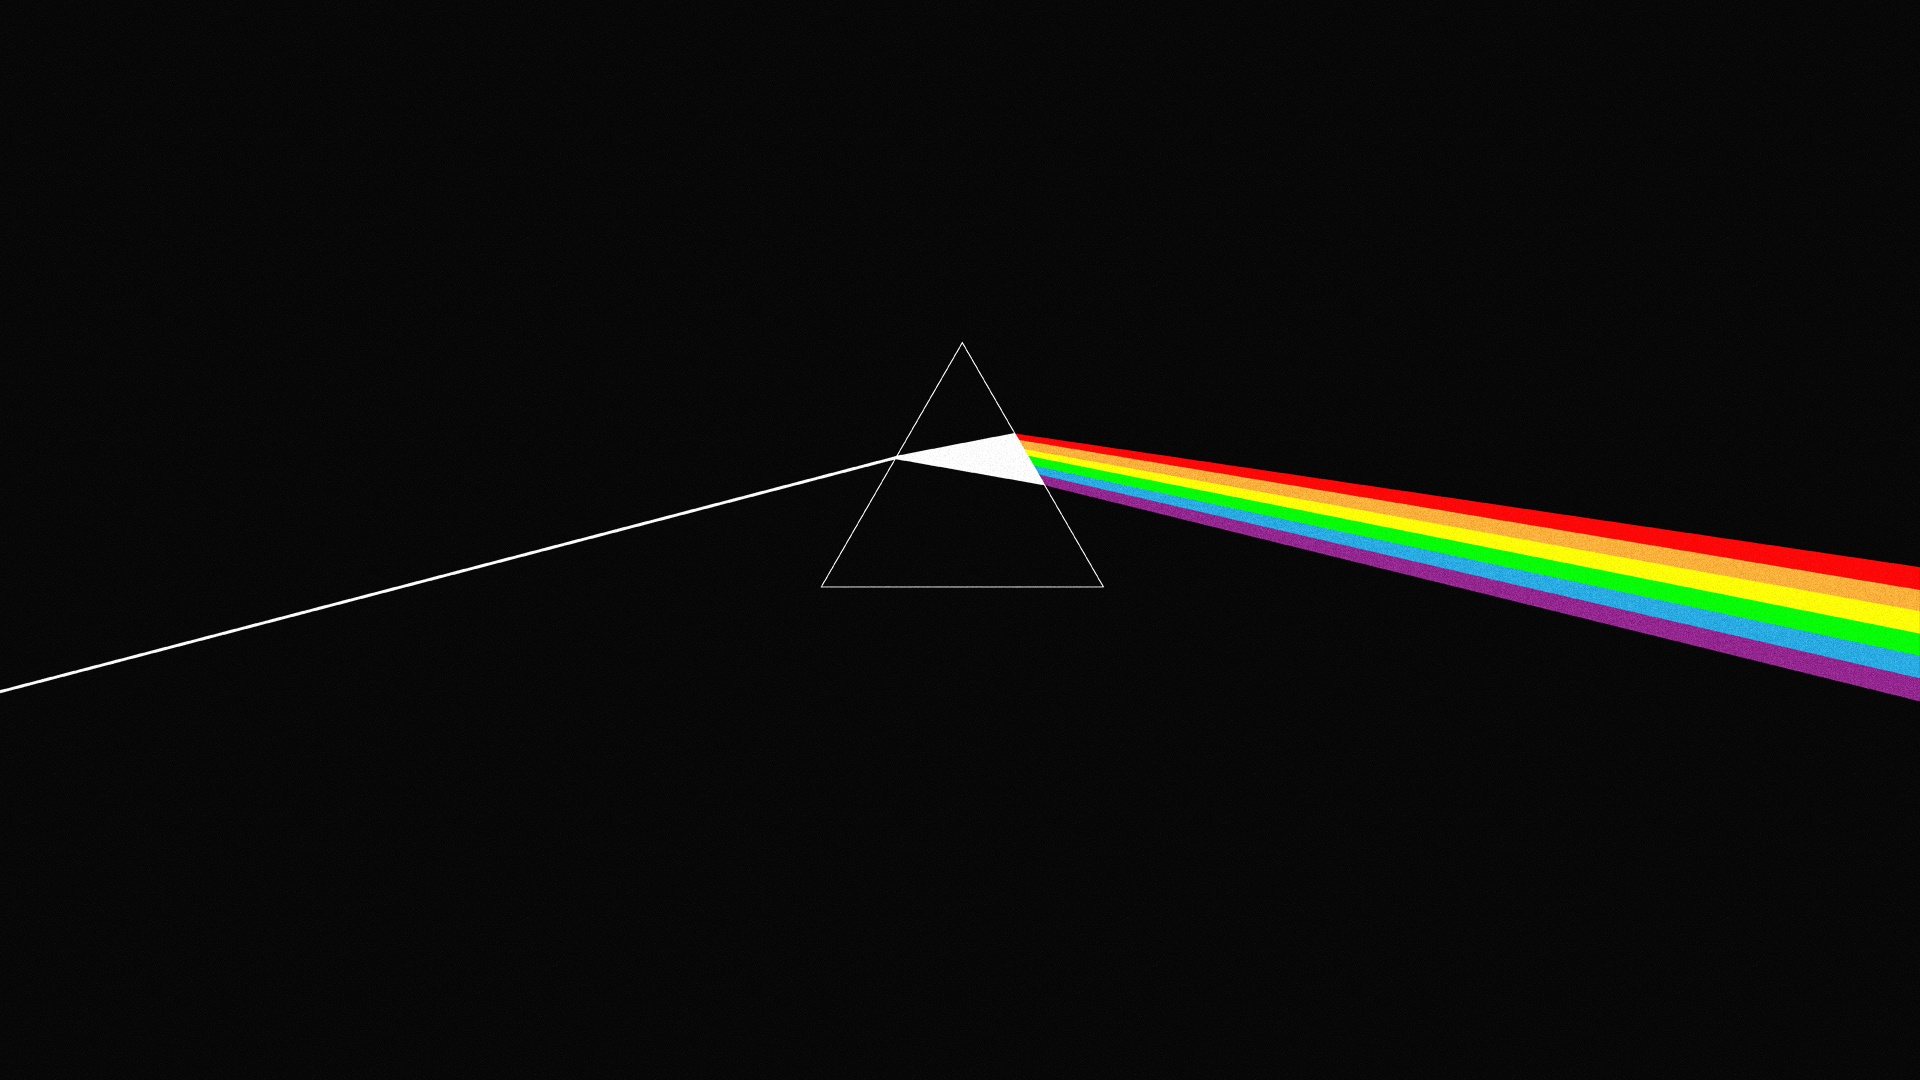 Fond D Cran Pink Floyd Gratuitement T L Charger